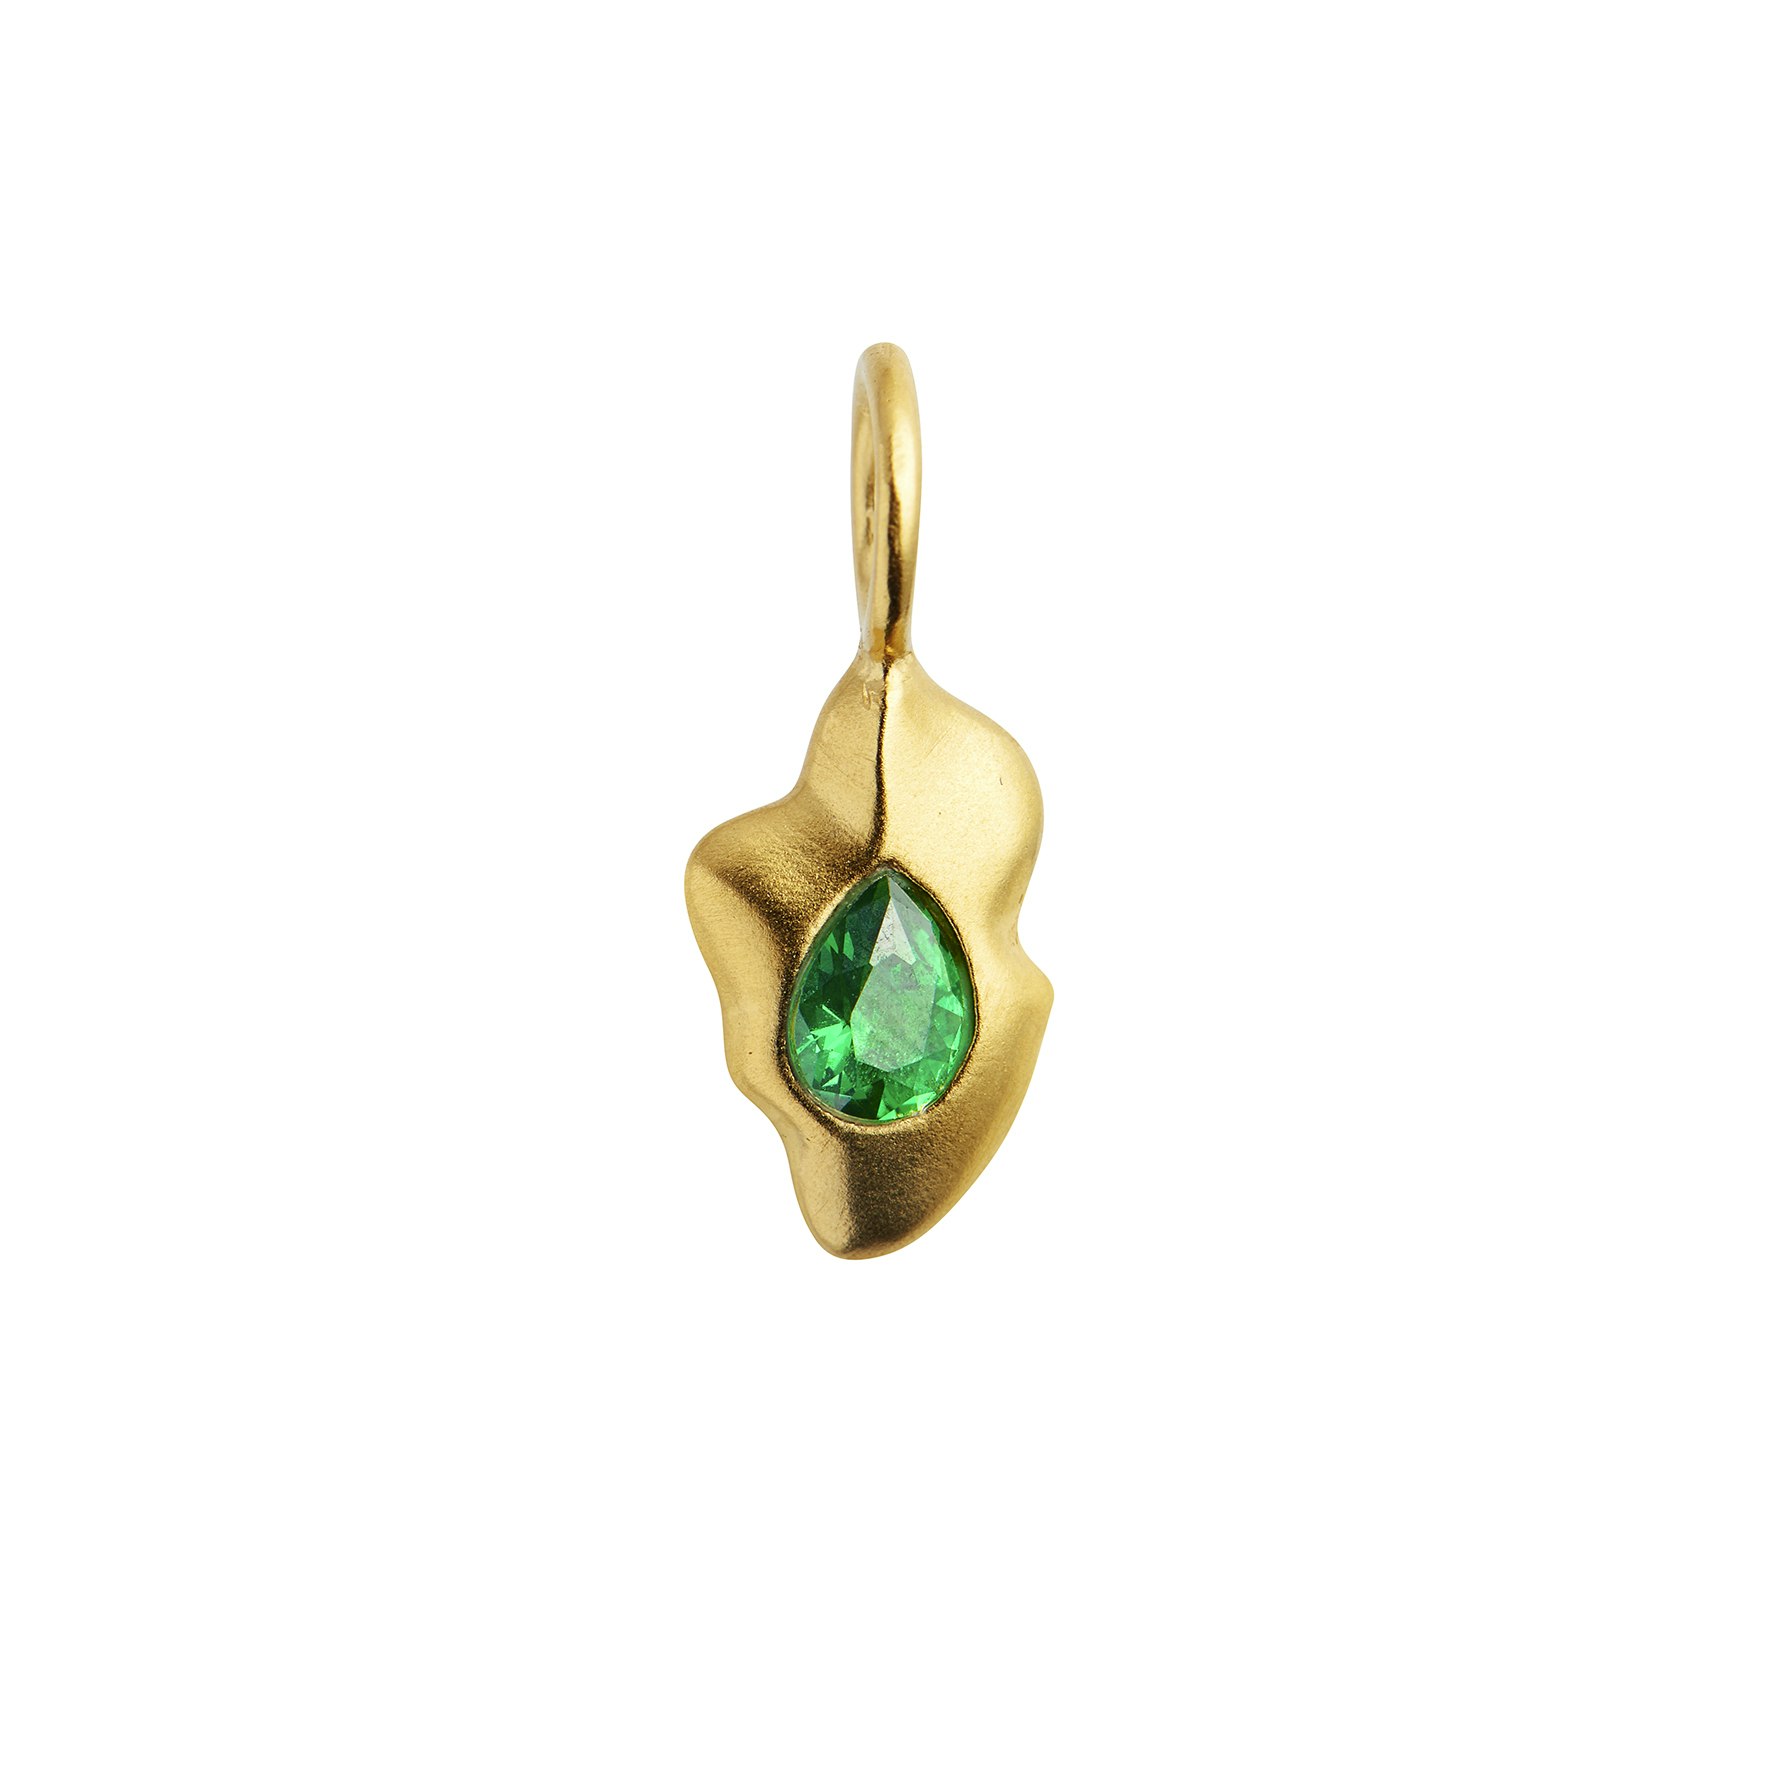 Glimpse Pendant With Green Stone fra STINE A Jewelry i Forgylt-Sølv Sterling 925